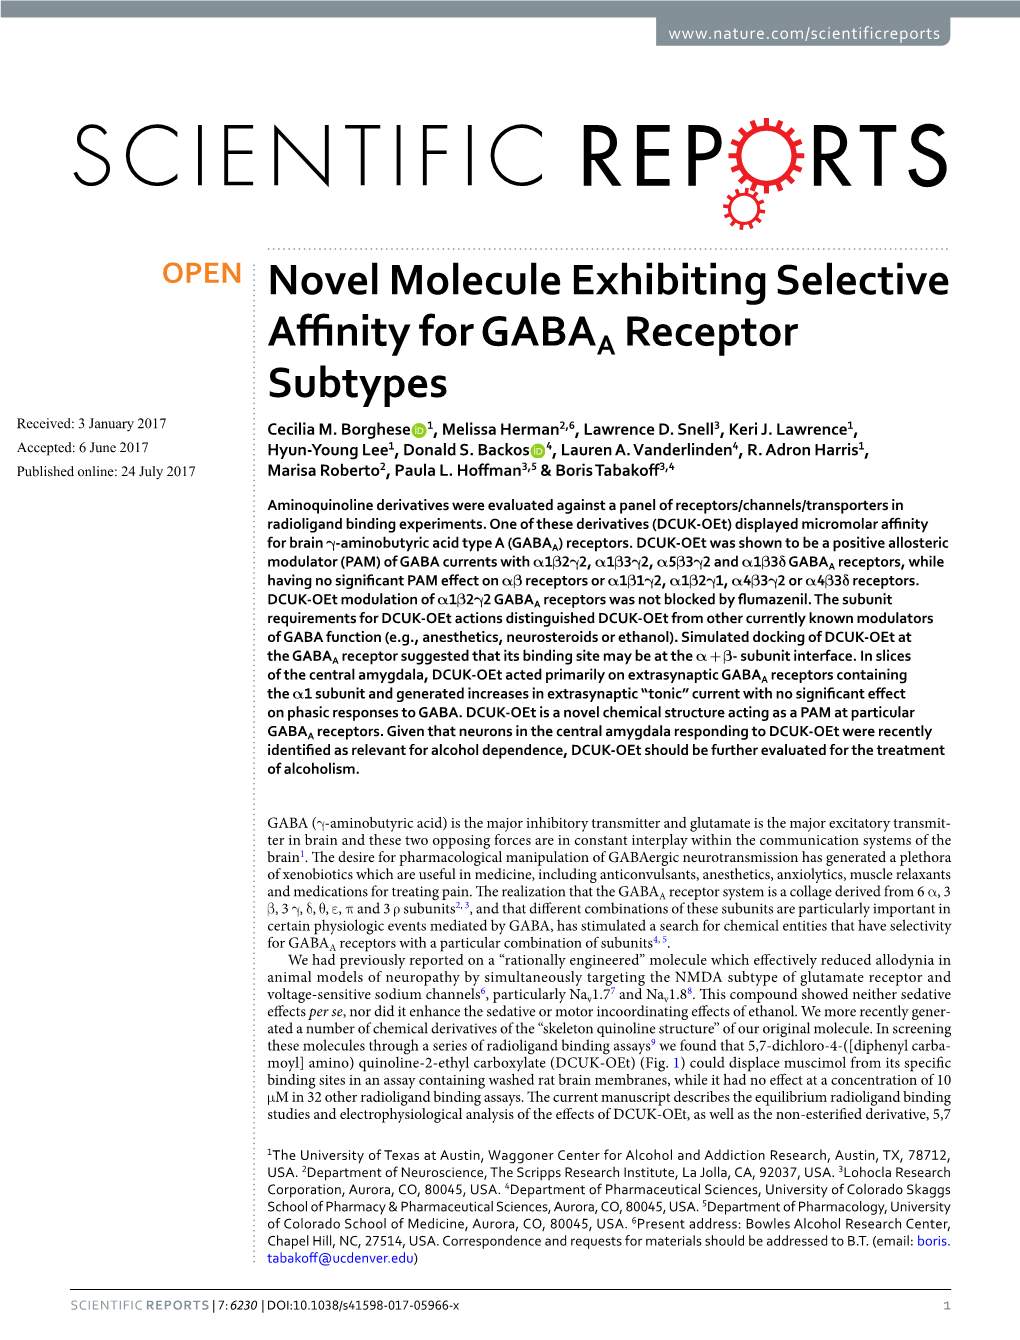 Novel Molecule Exhibiting Selective Affinity for GABAA Receptor Subtypes